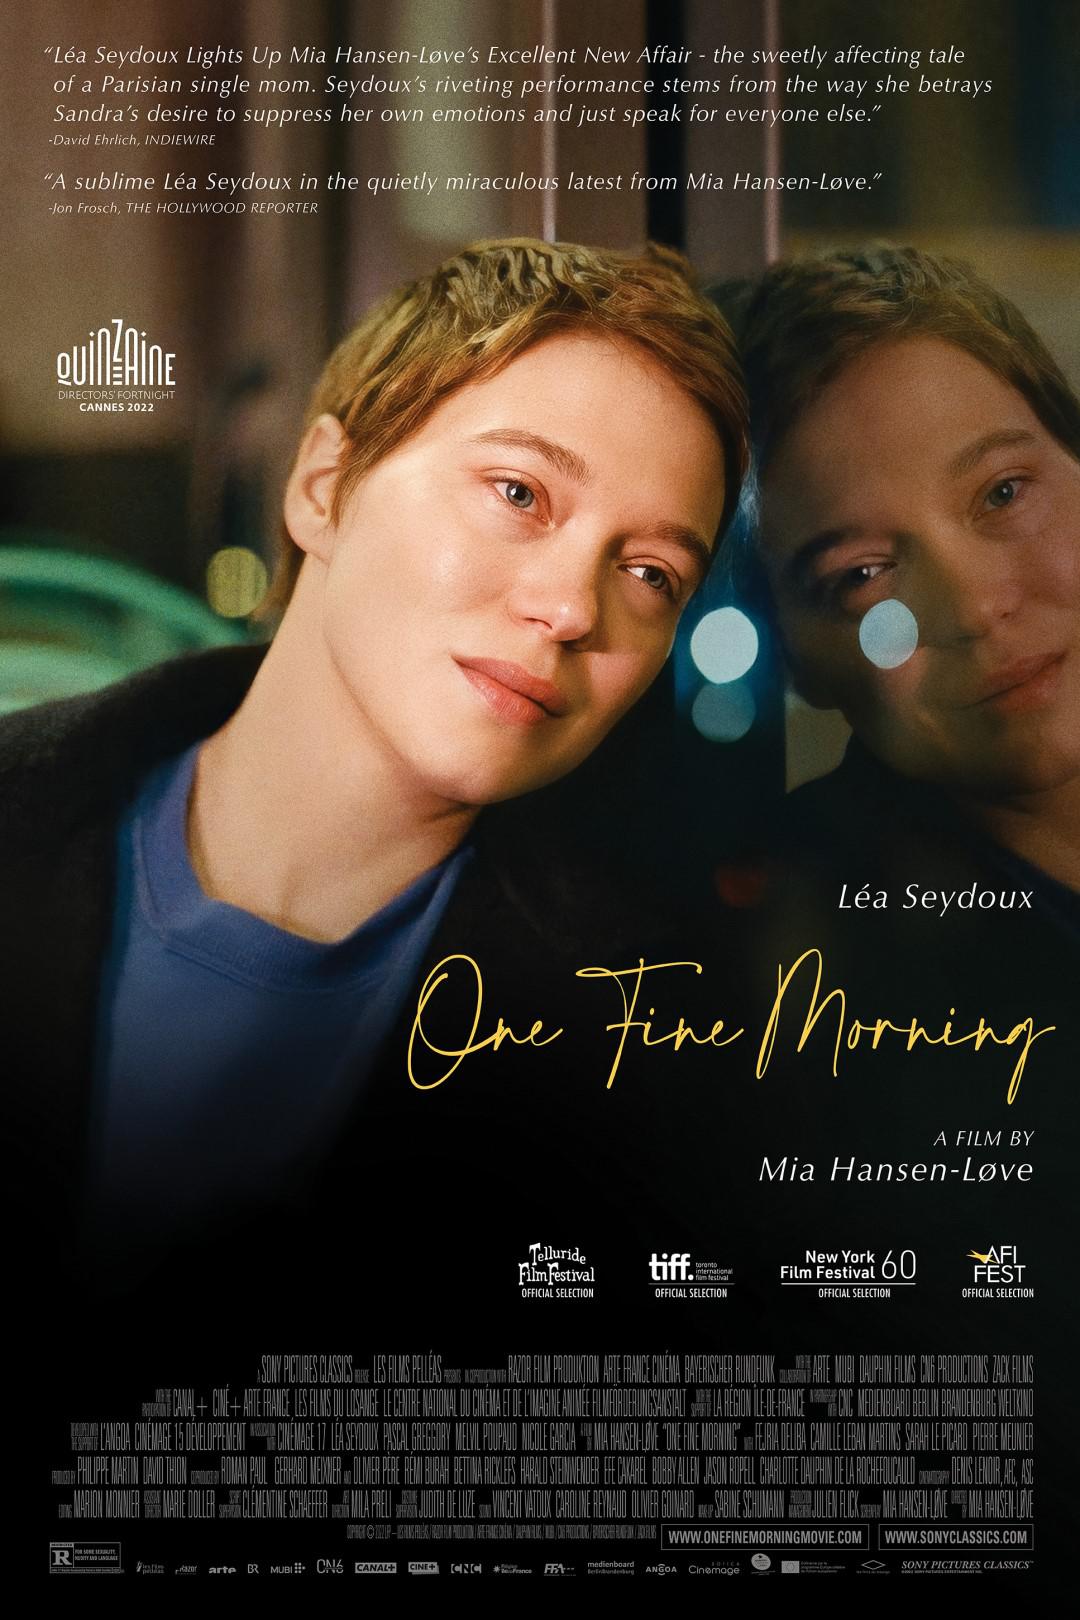 One Fine Morning - Official Trailer (2023) Léa Seydoux, Pascal Greggory,  Melvil Poupaud 